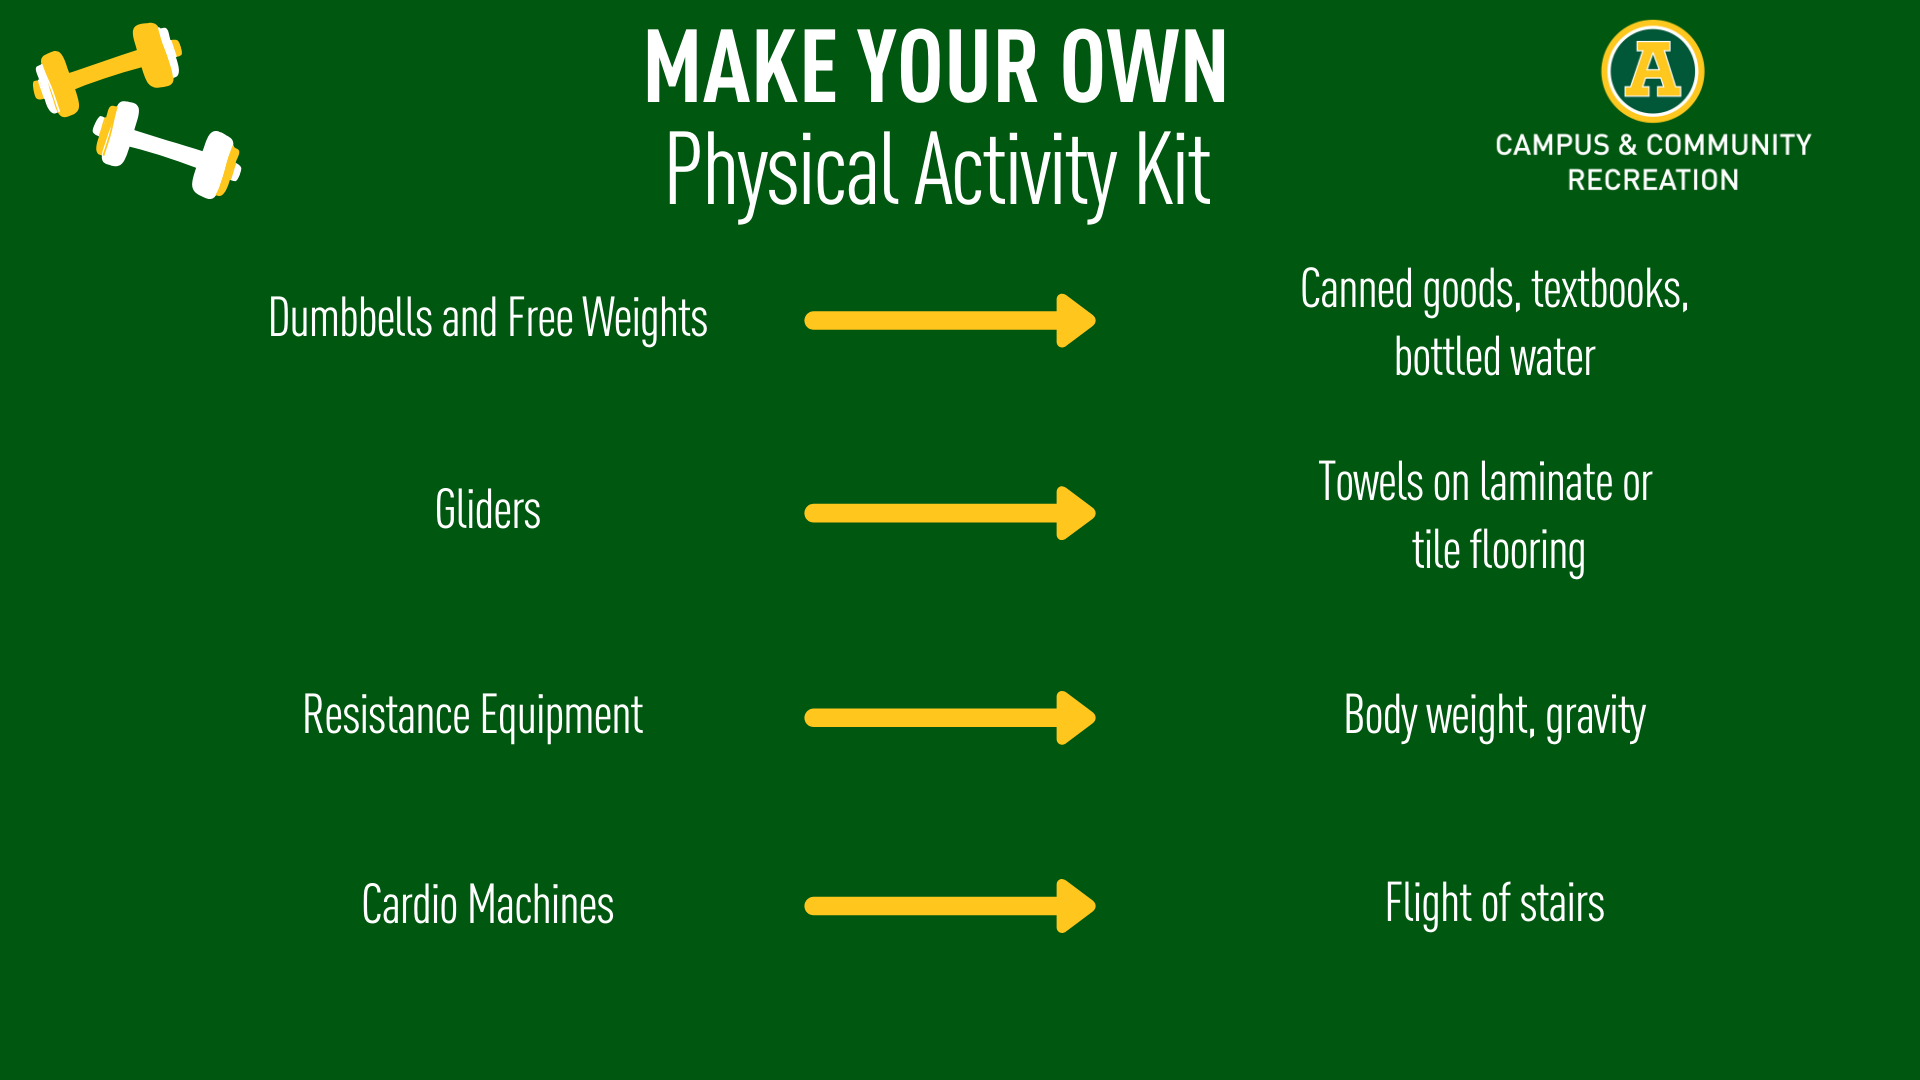 Make your own wellness kit